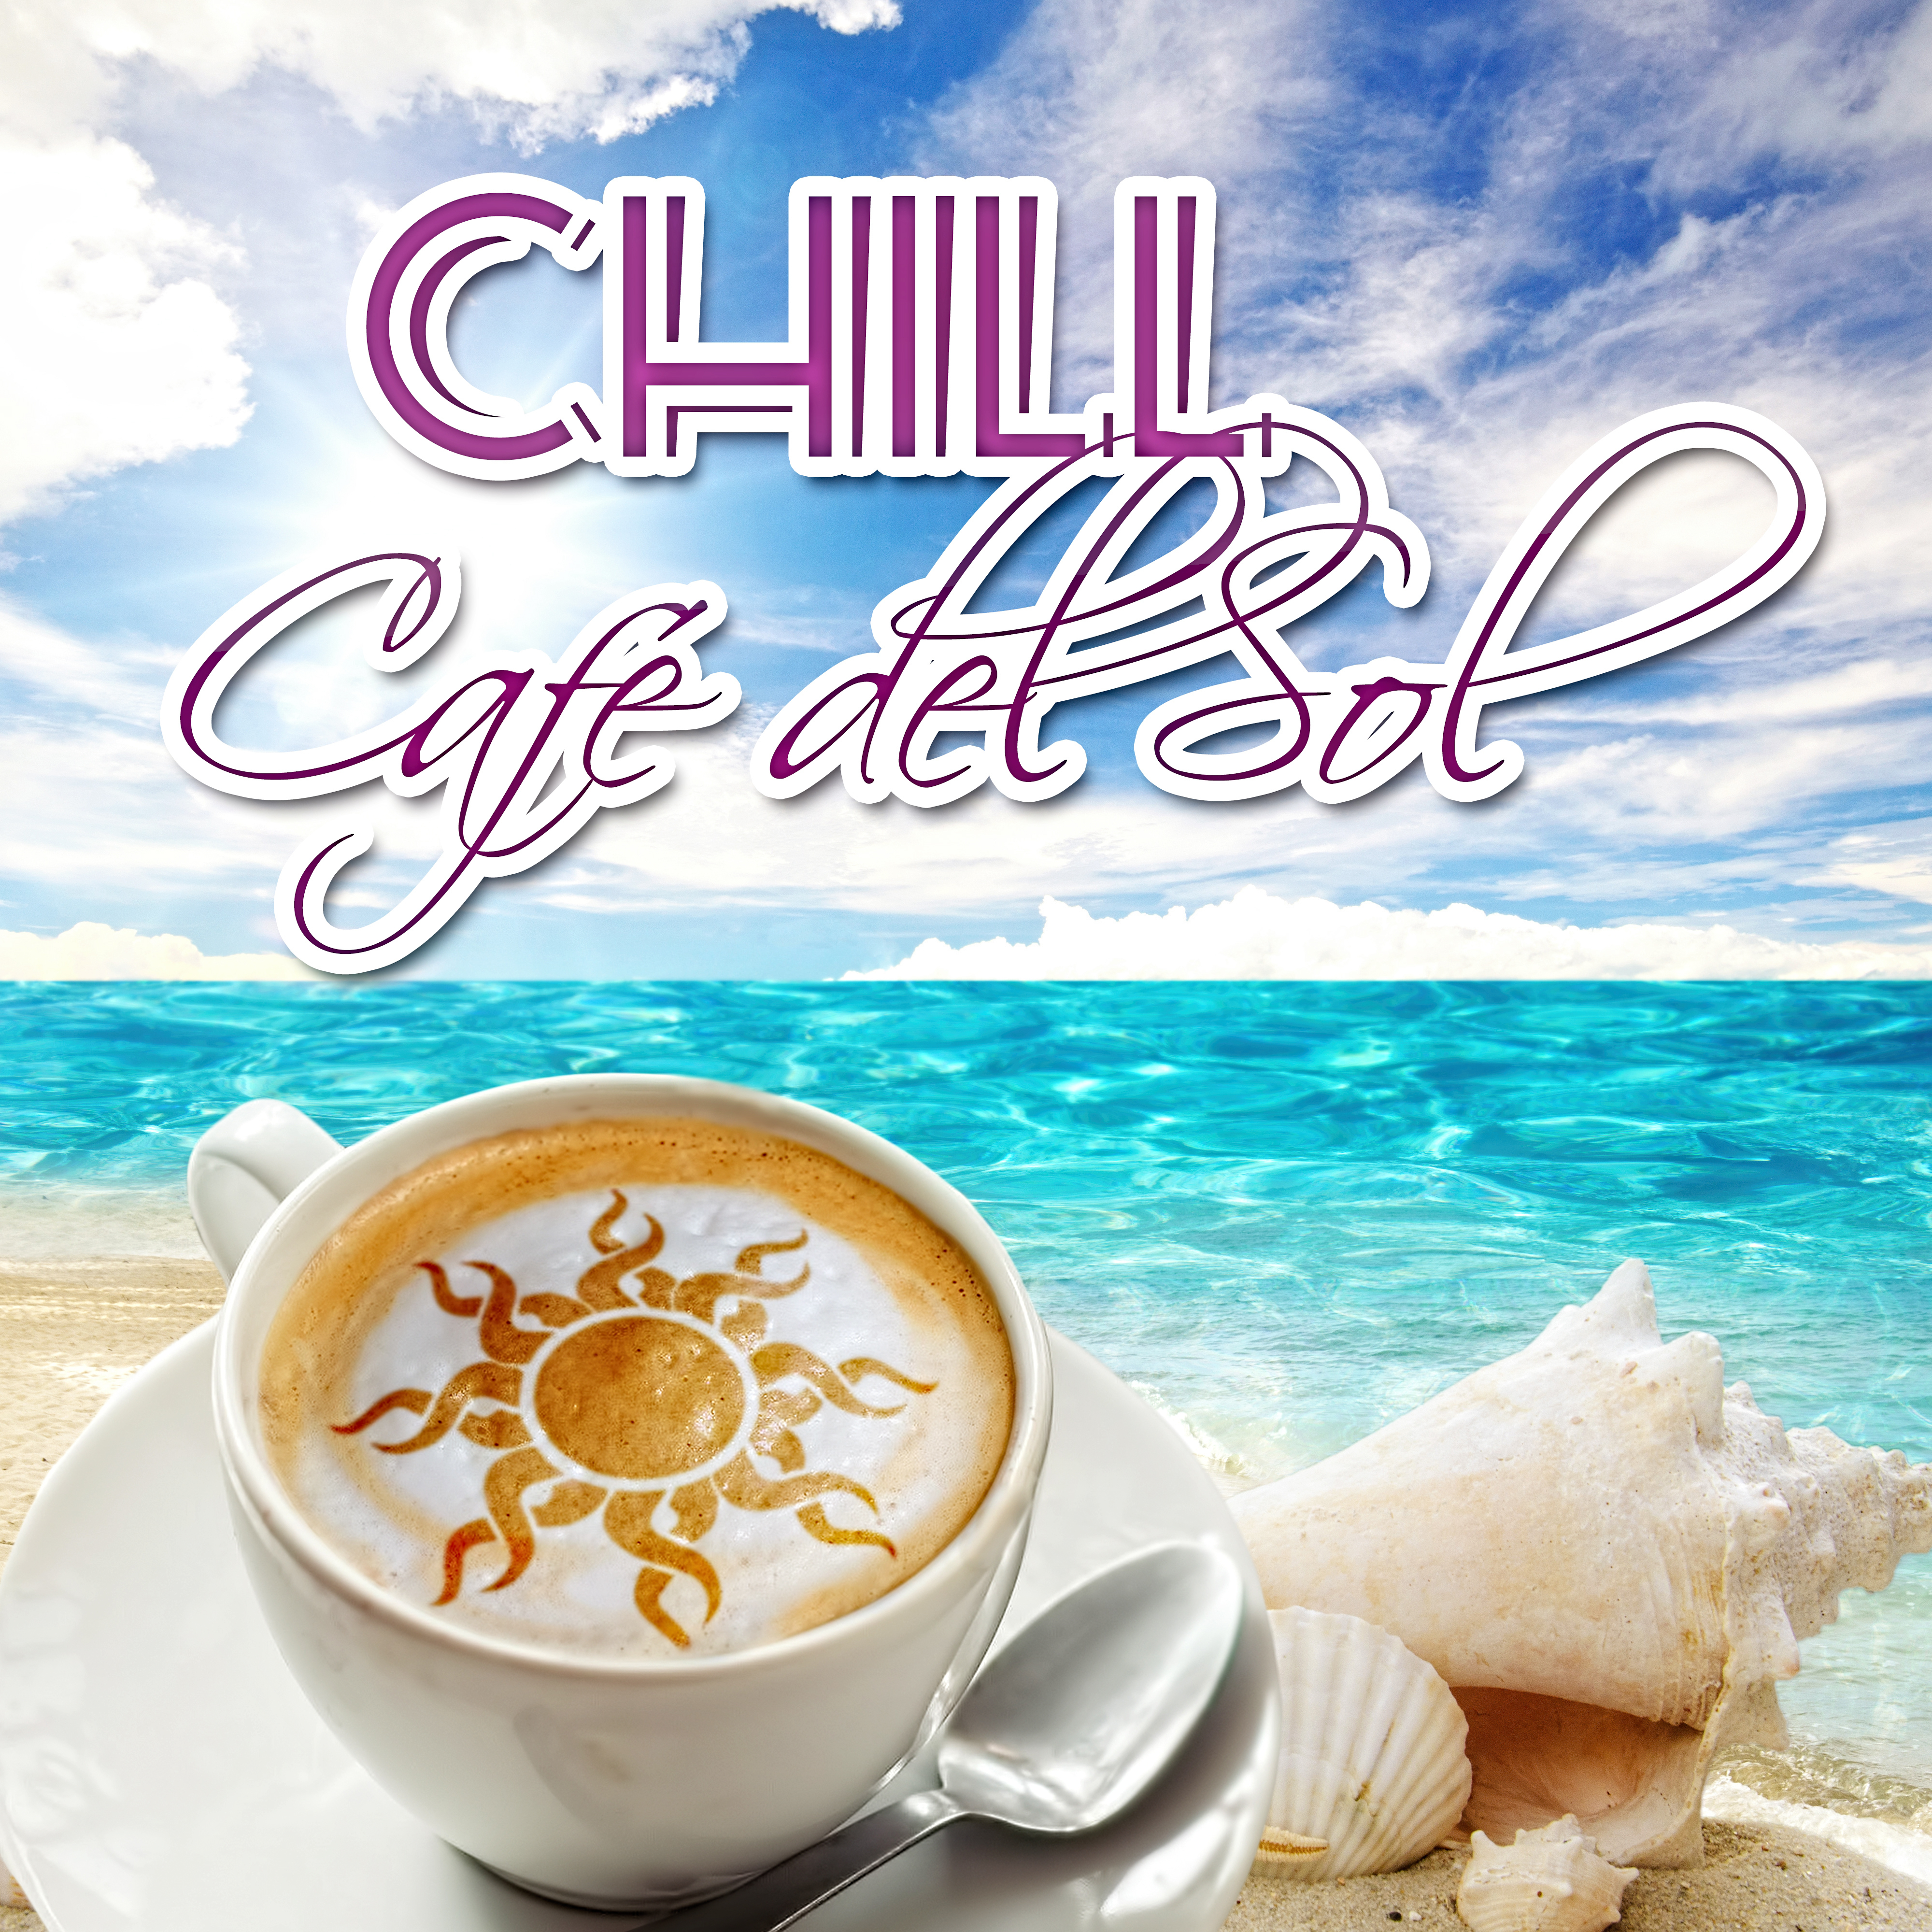 Chill Café del Sol – Chill Songs, Bar Music & Cafe Music Chillout, Chillout Lounge Music